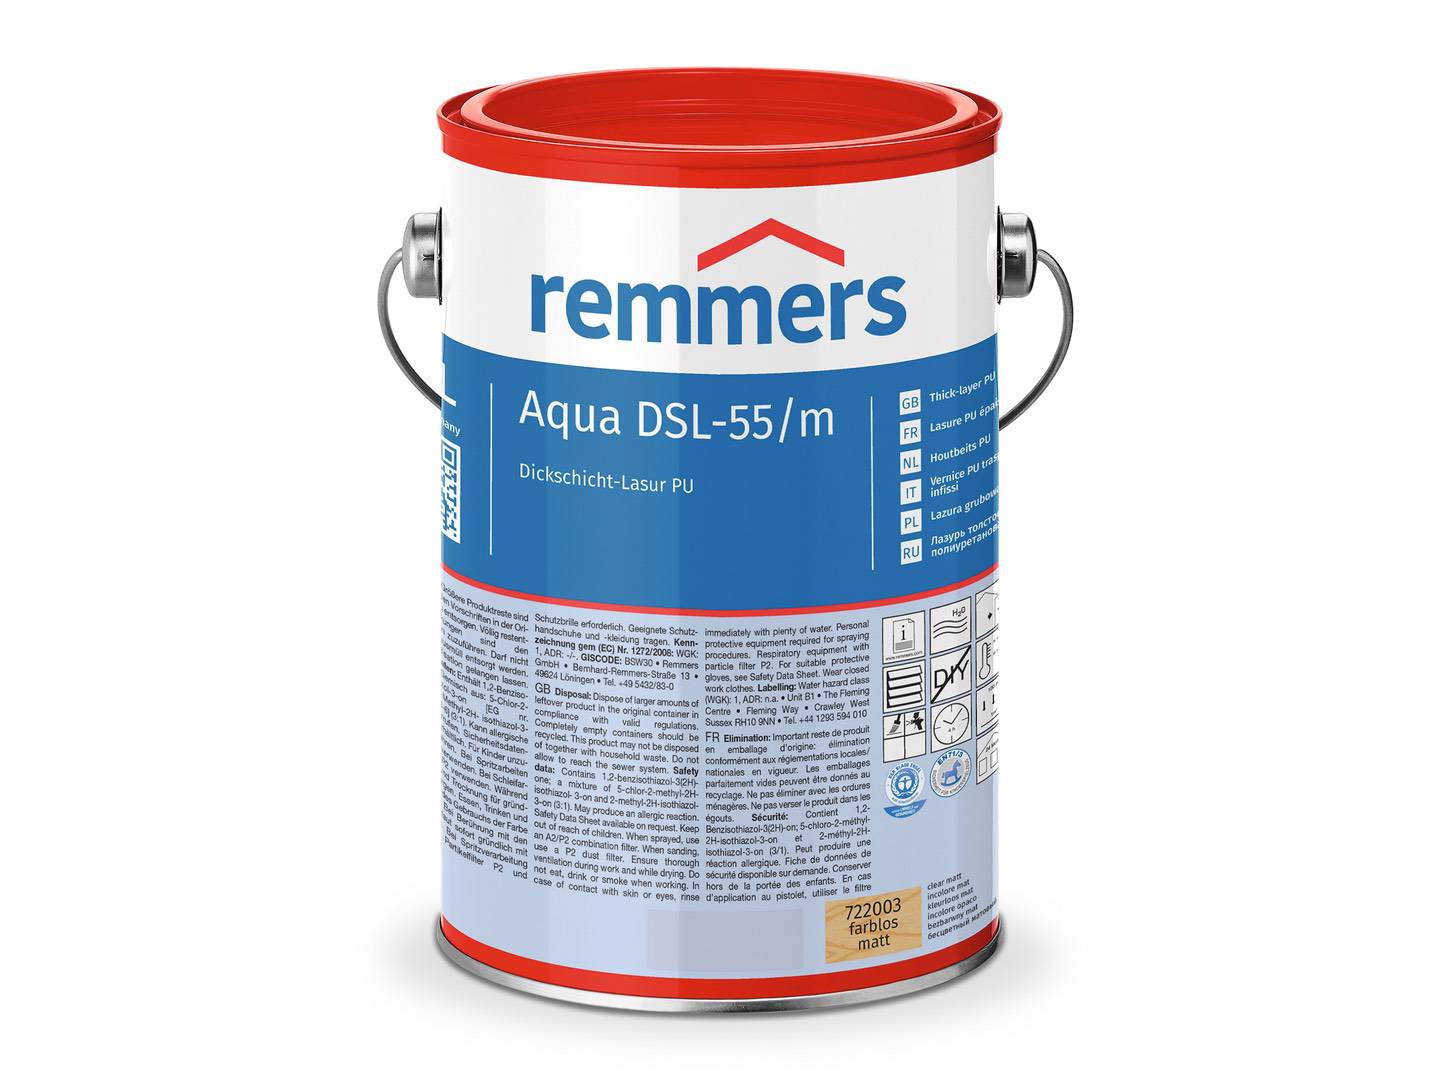 REMMERS Aqua DSL-55-Dickschicht-Lasur PU